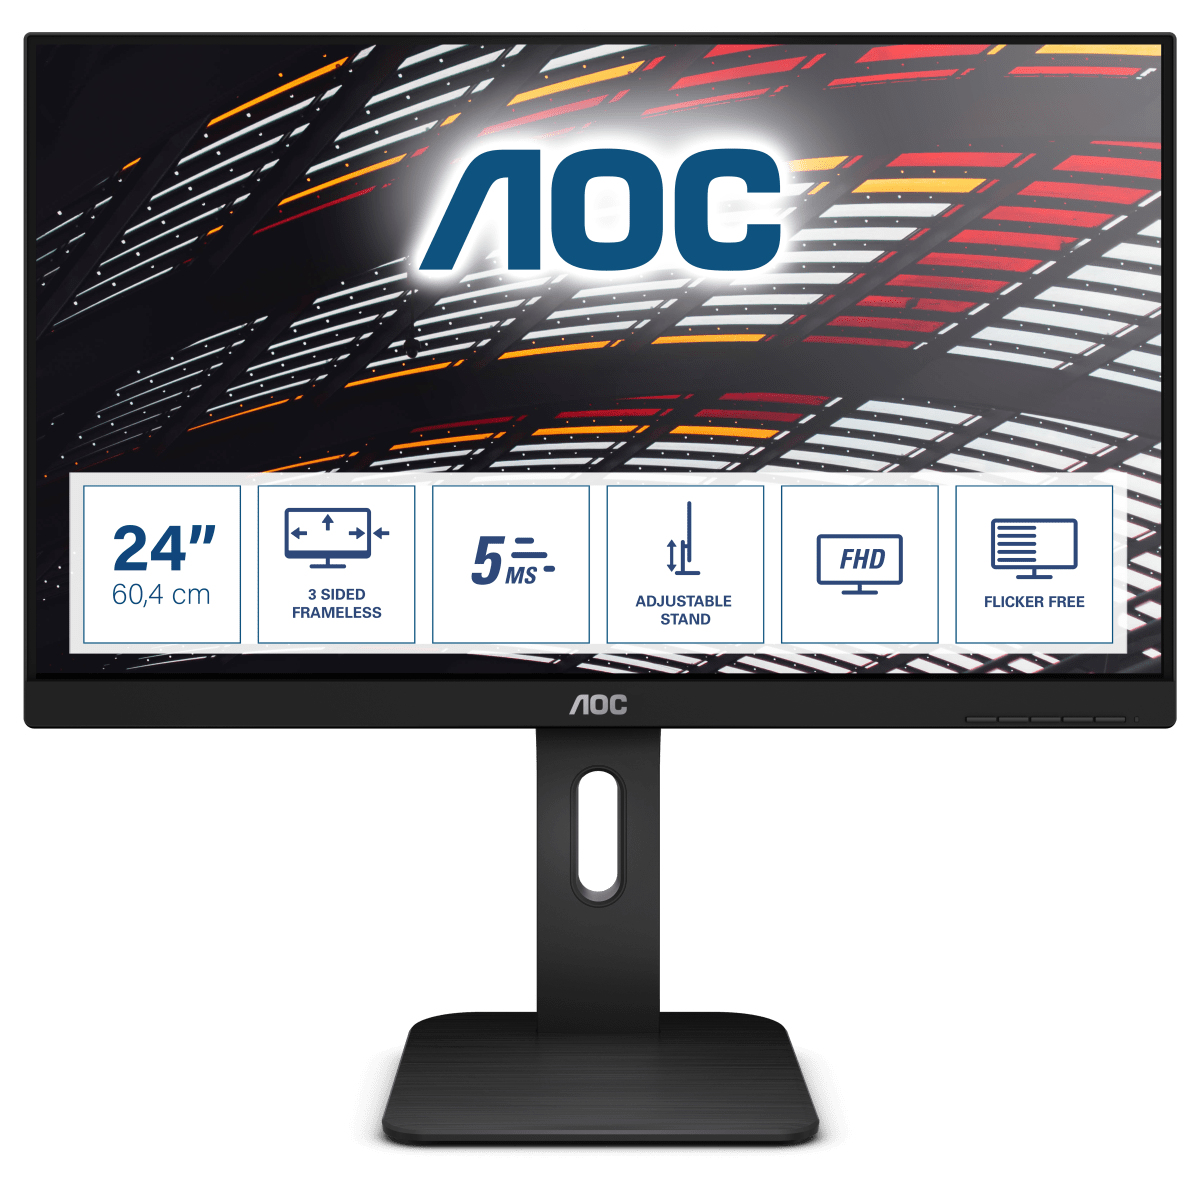 AOC P1 24P1 computer monitor